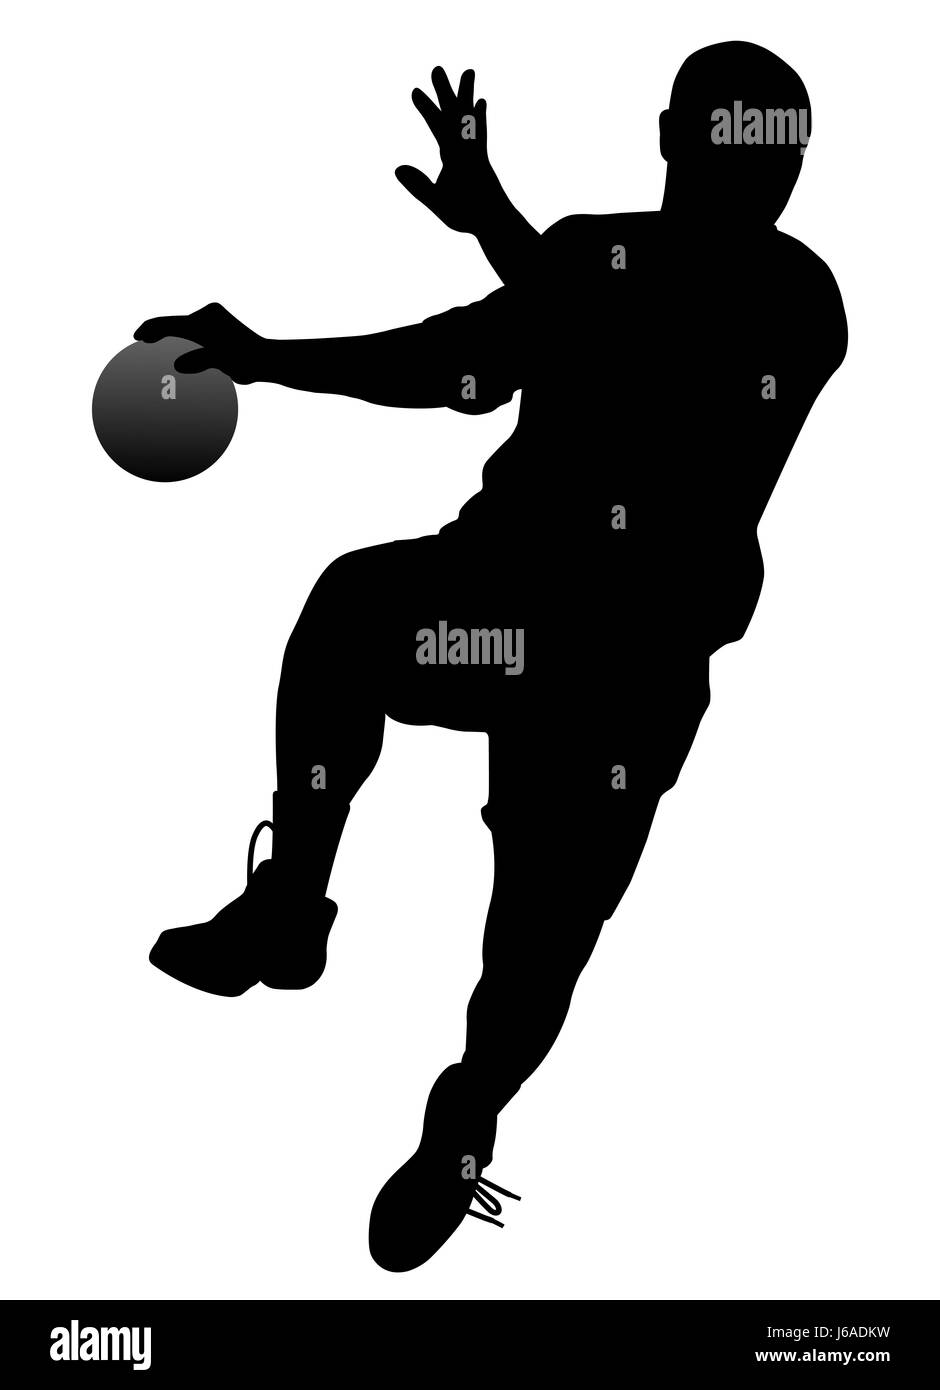 Sports Le sport masculin Masculin handball player silhouette man shoot sport sports Banque D'Images